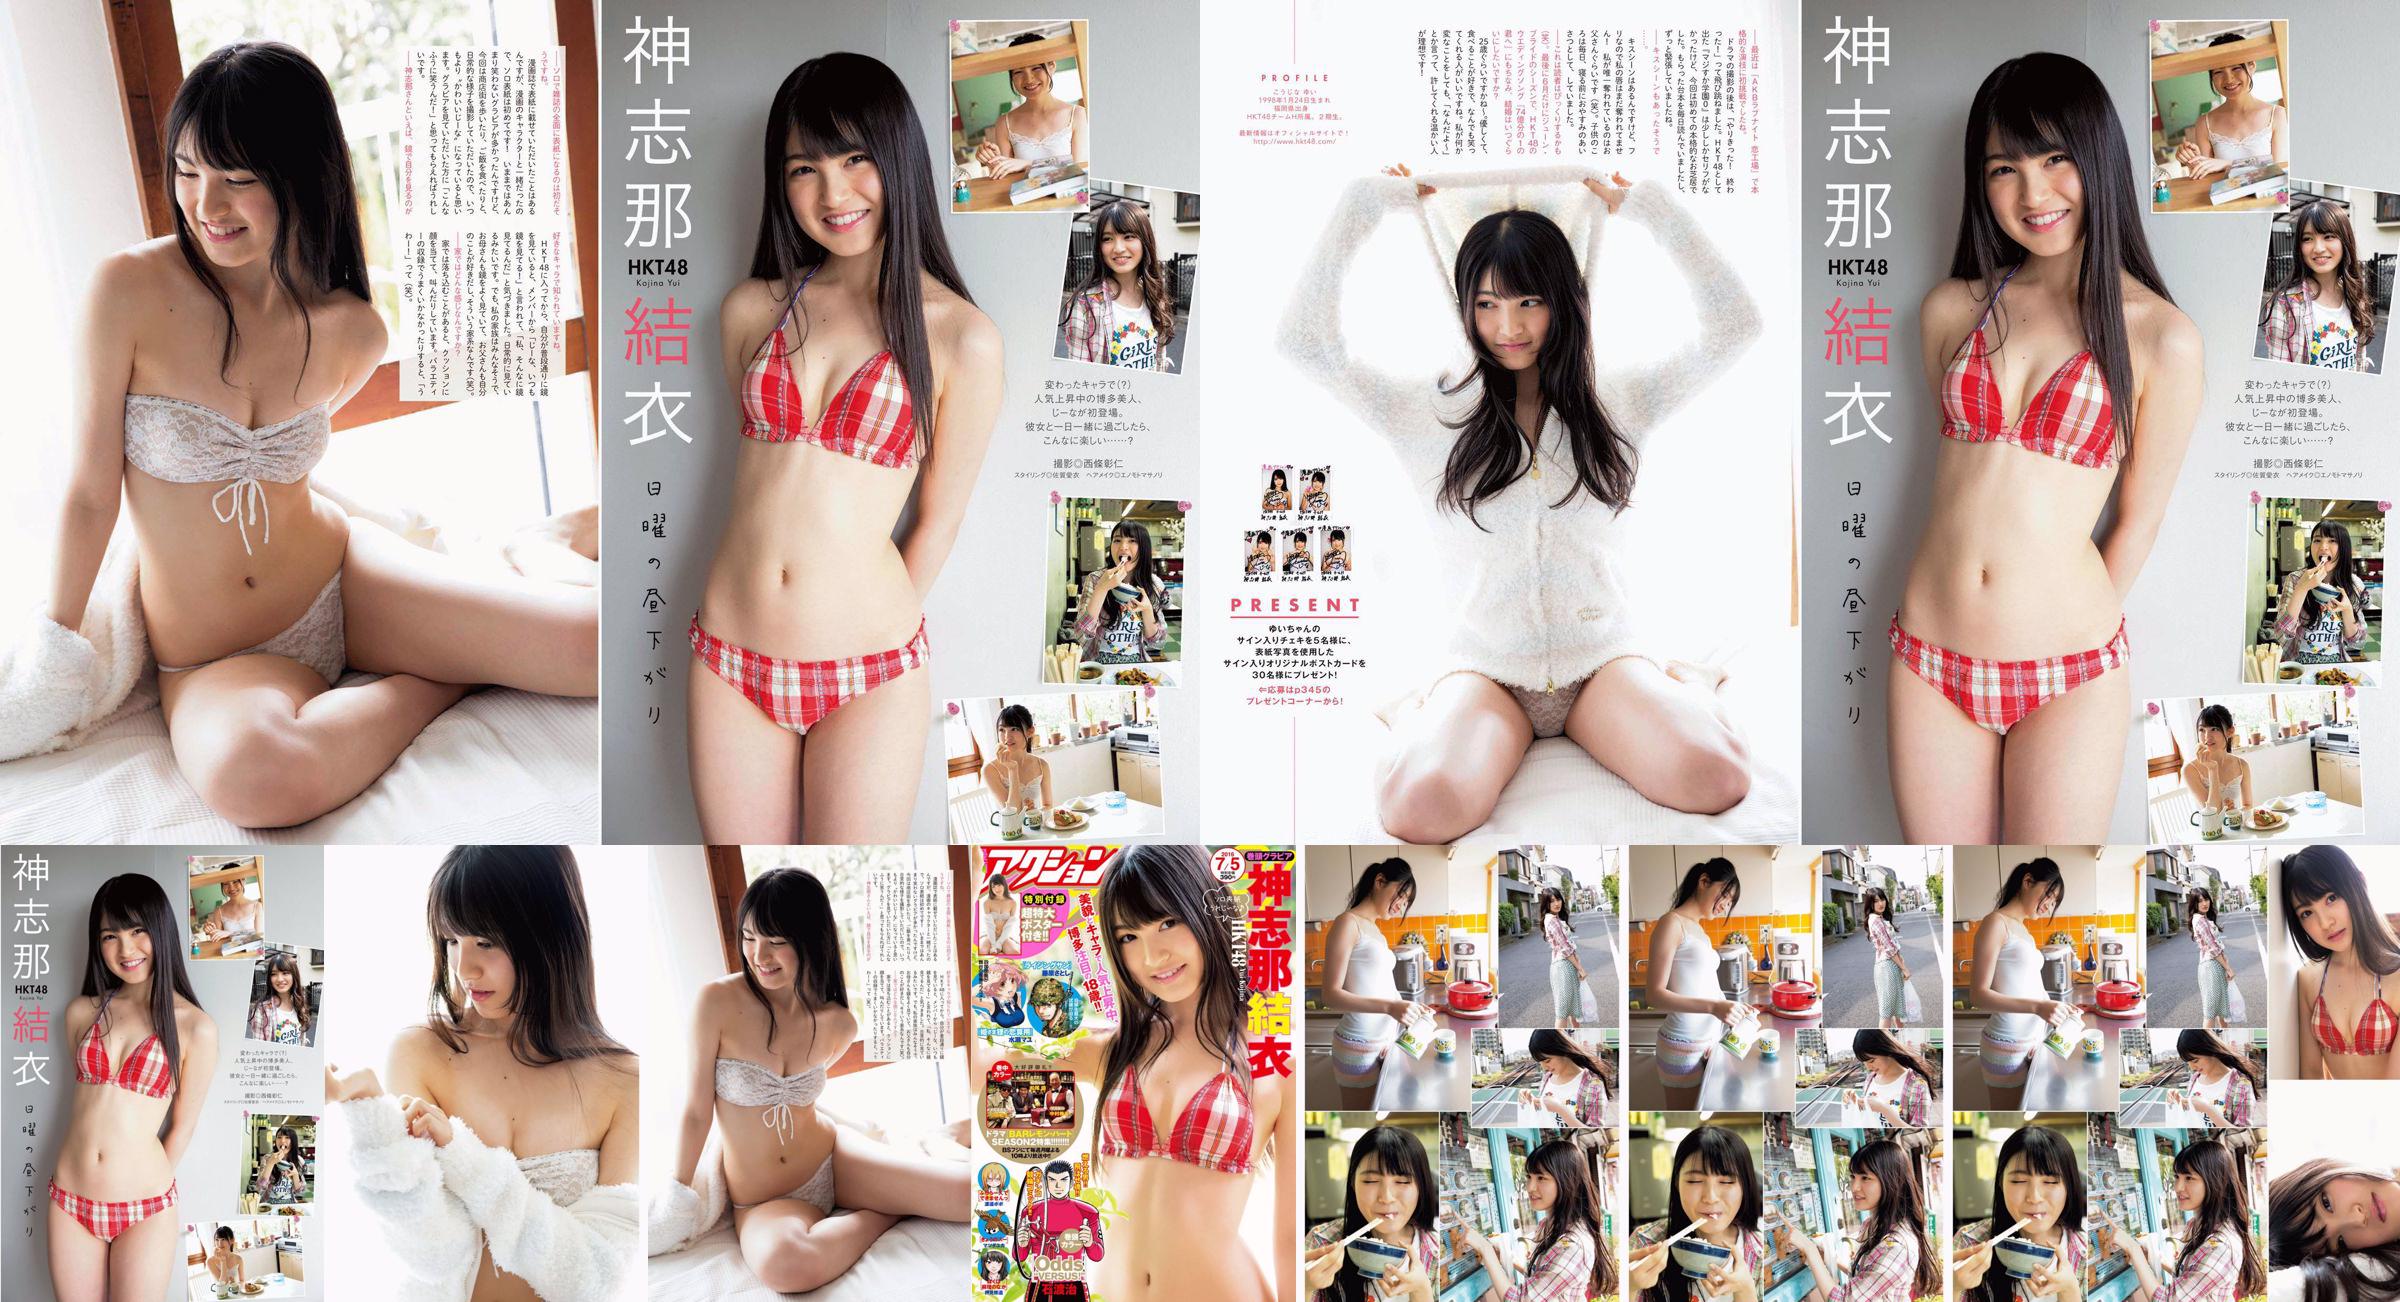 [Manga Action] Shinshina Yui 2016 N ° 13 Photo Magazine No.2fe4c9 Page 3